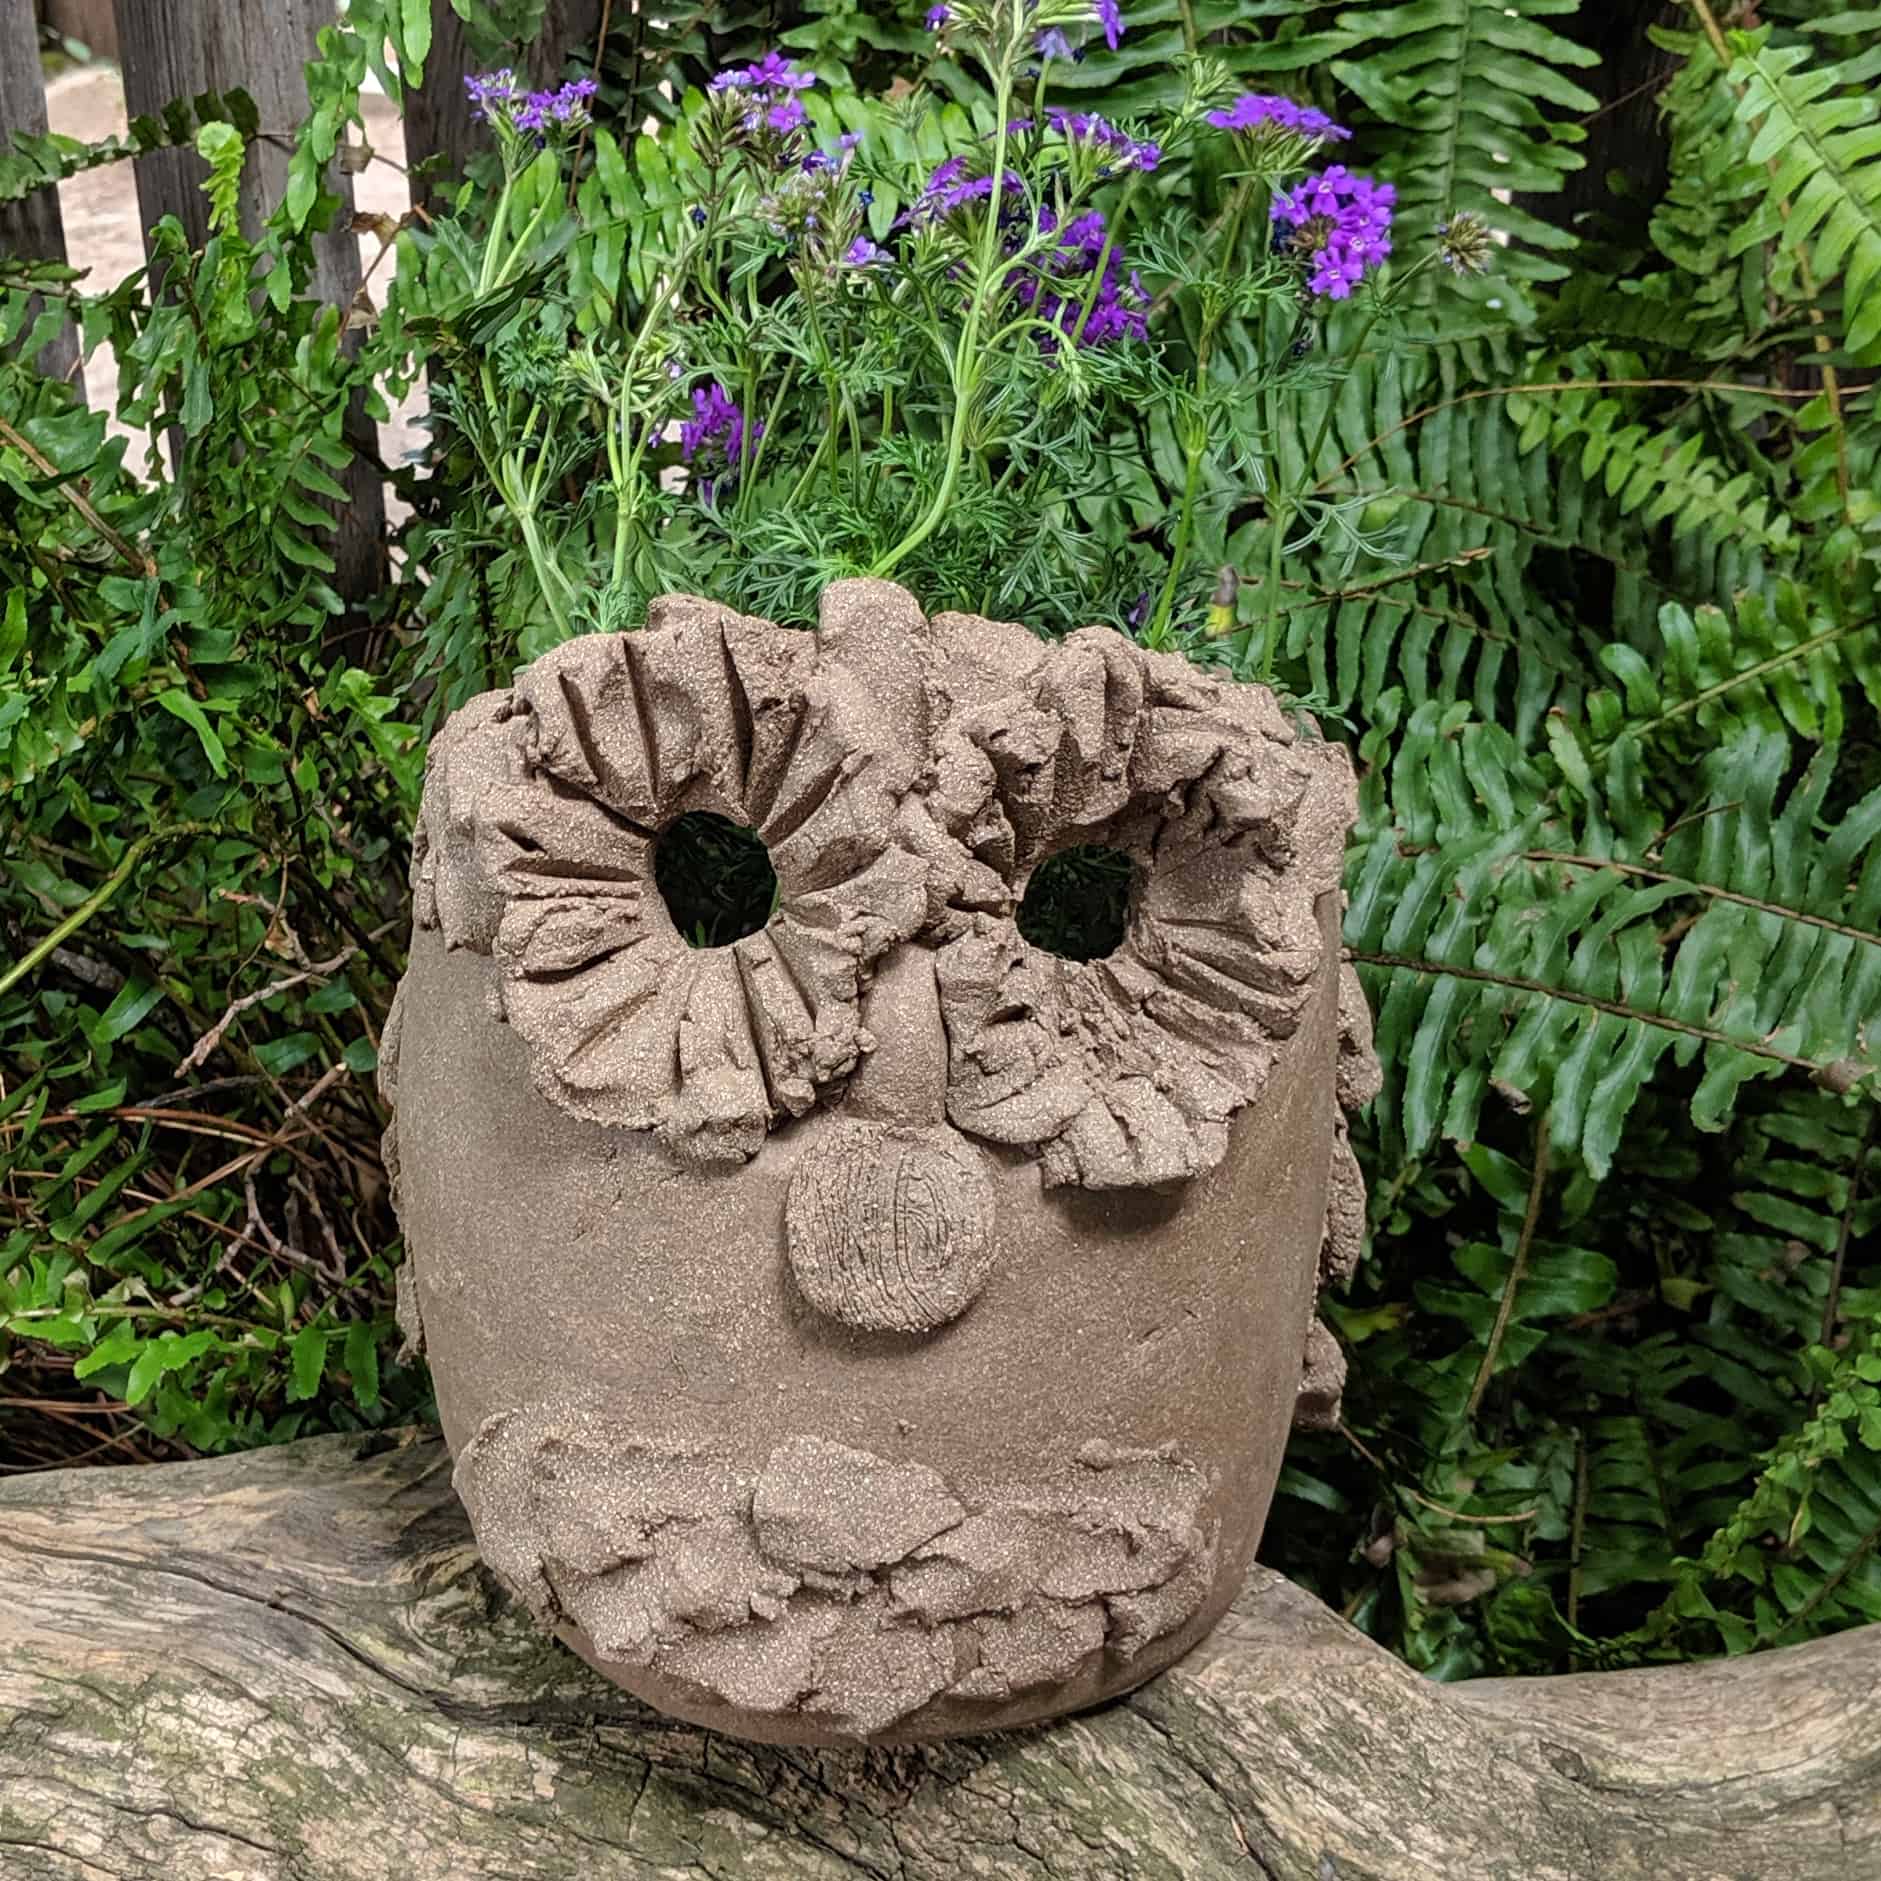 Margaret Hudson Frog Planter - Handmade Ceramic Sculpture